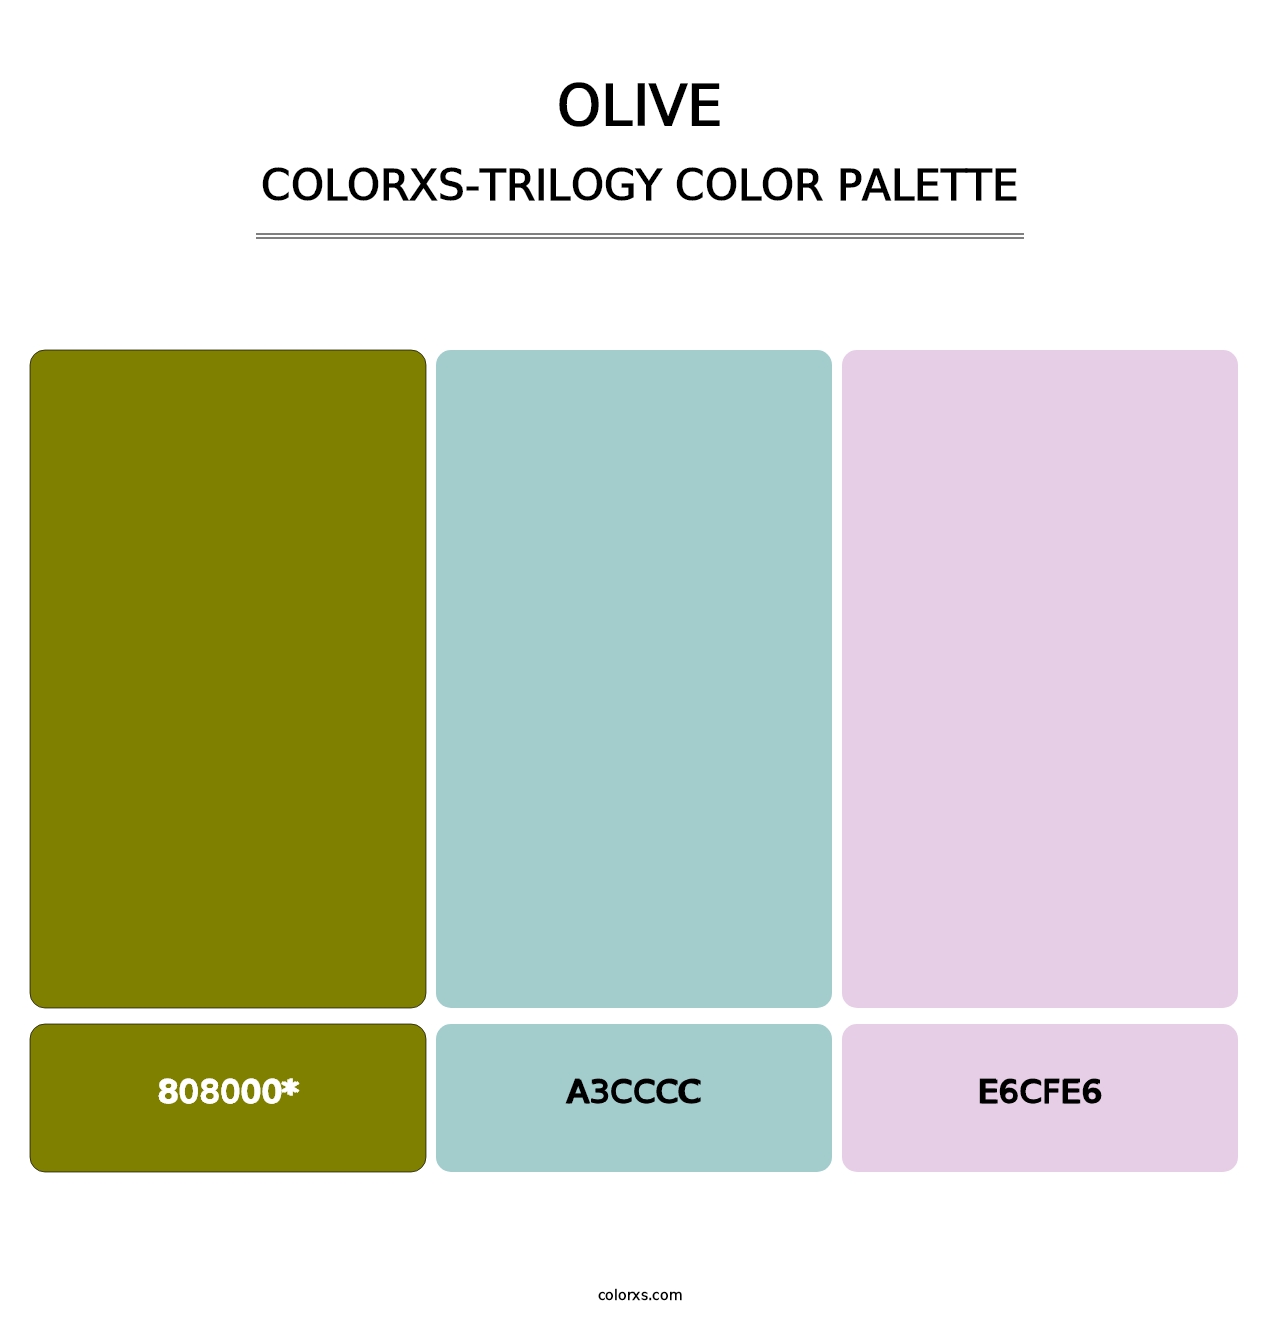 Olive - Colorxs Trilogy Palette